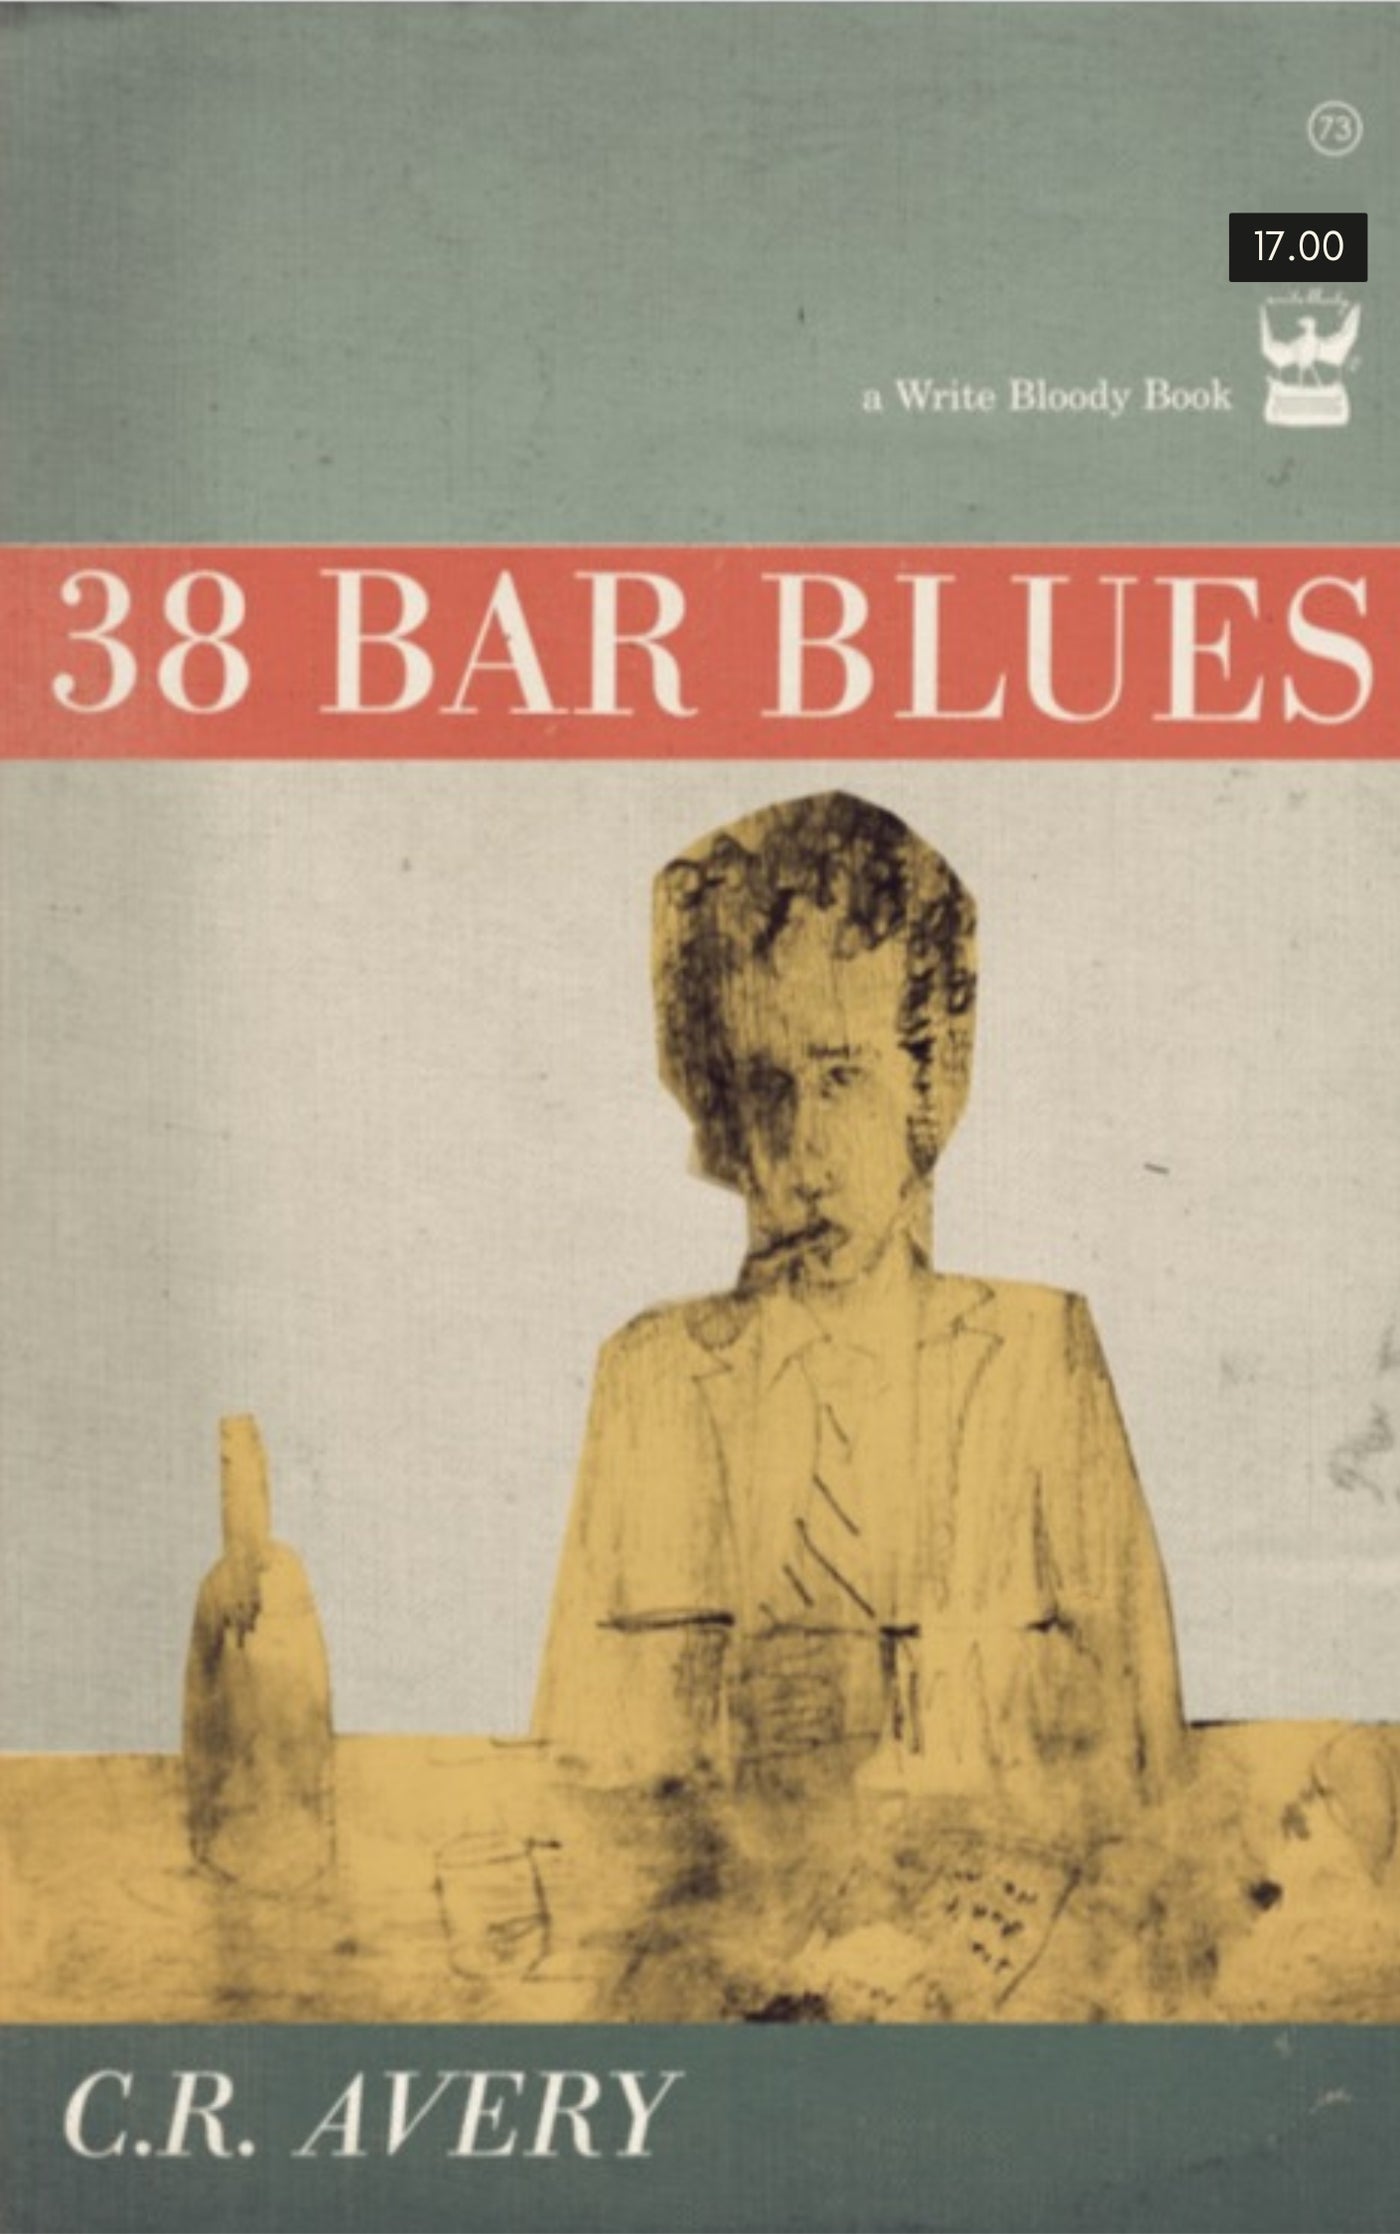 38 Bar Blues by C.R. Avery